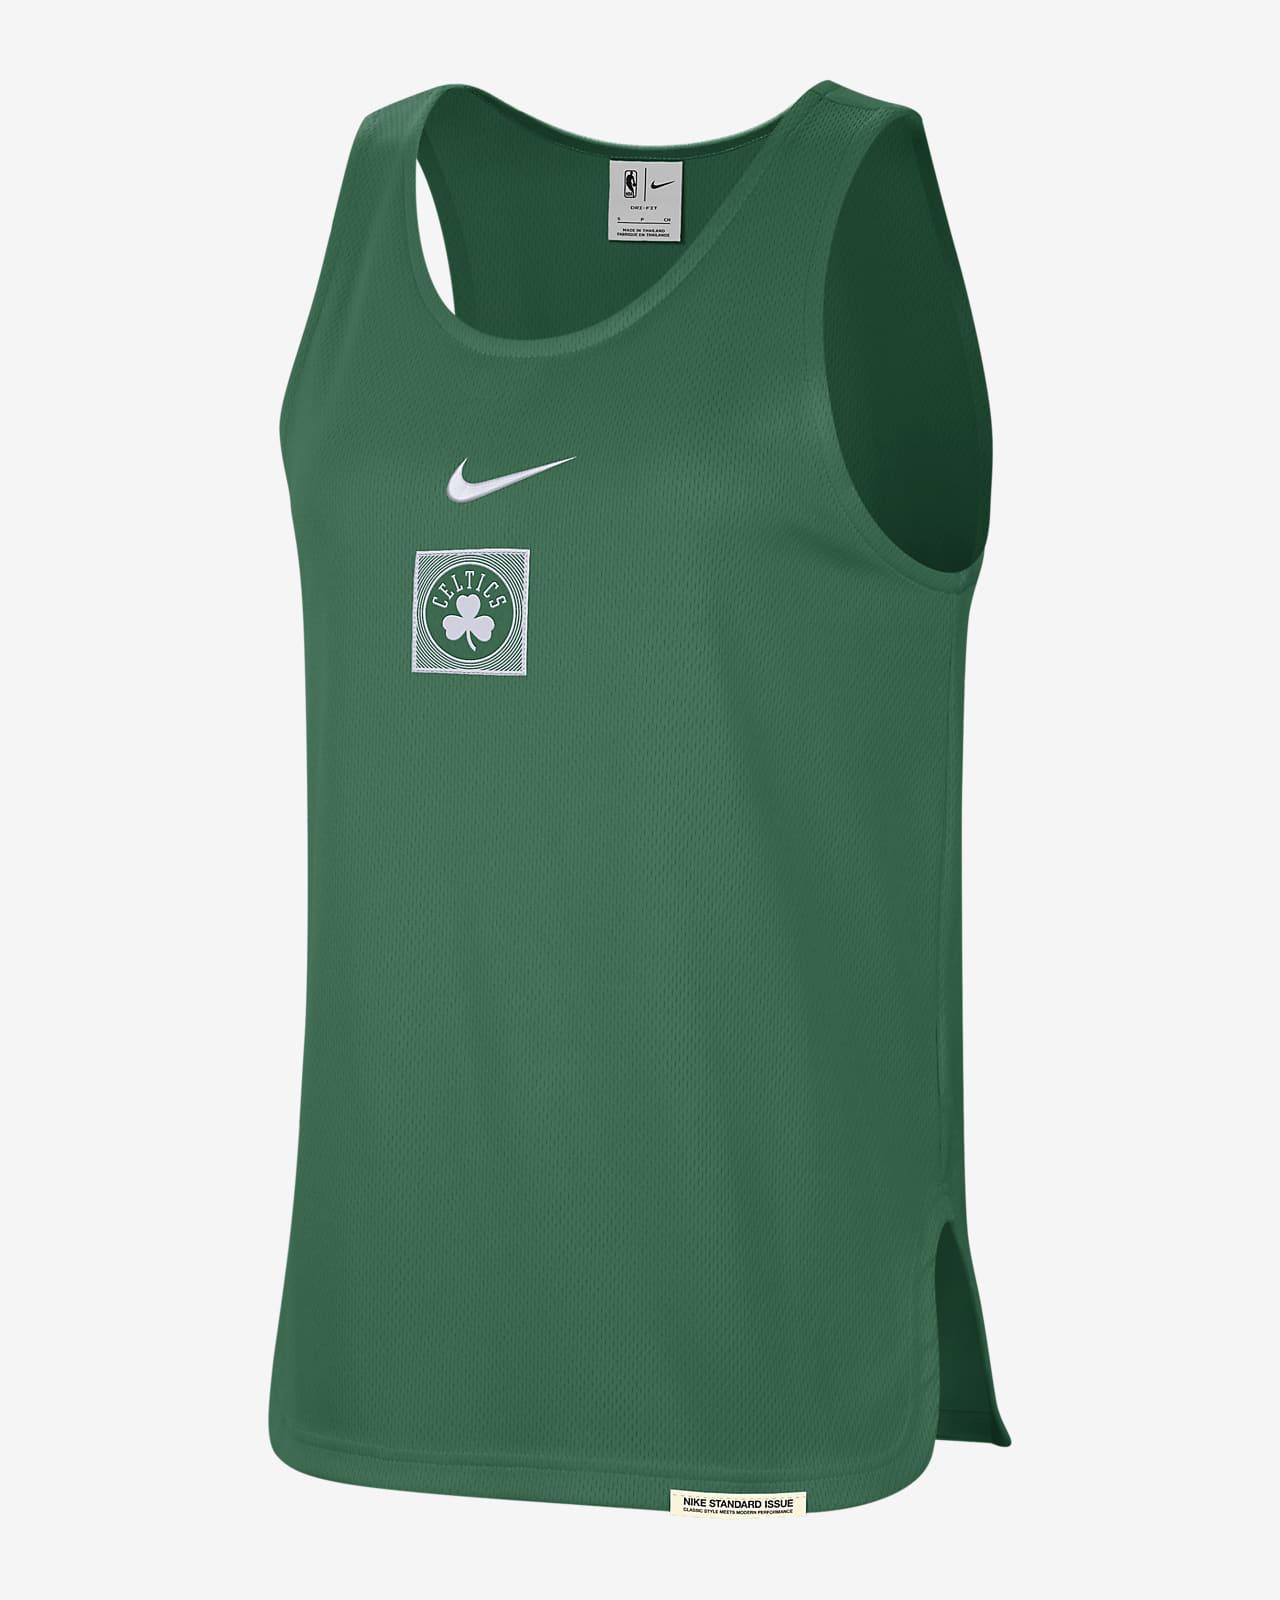 Jersey Nike Dri-FIT de la NBA para mujer Boston Celtics Standard Issue